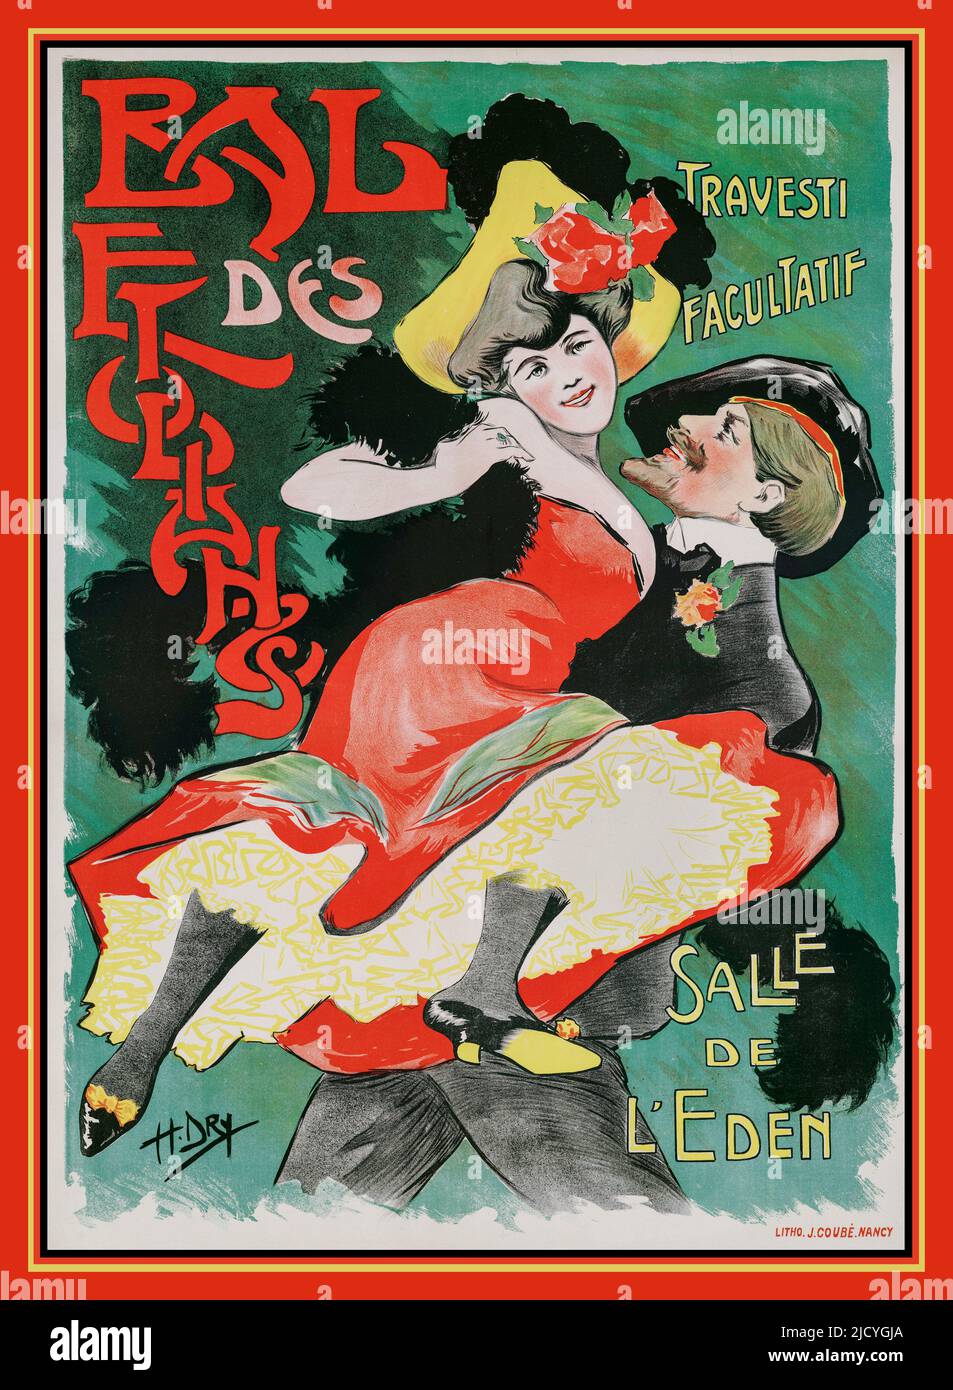 Vintage 1900s French entertainment dance poster Student Ball Transvestite optional Eden Hall  'Bal des étudiants Travesti facultatif Salle de l'Eden' France Stock Photo